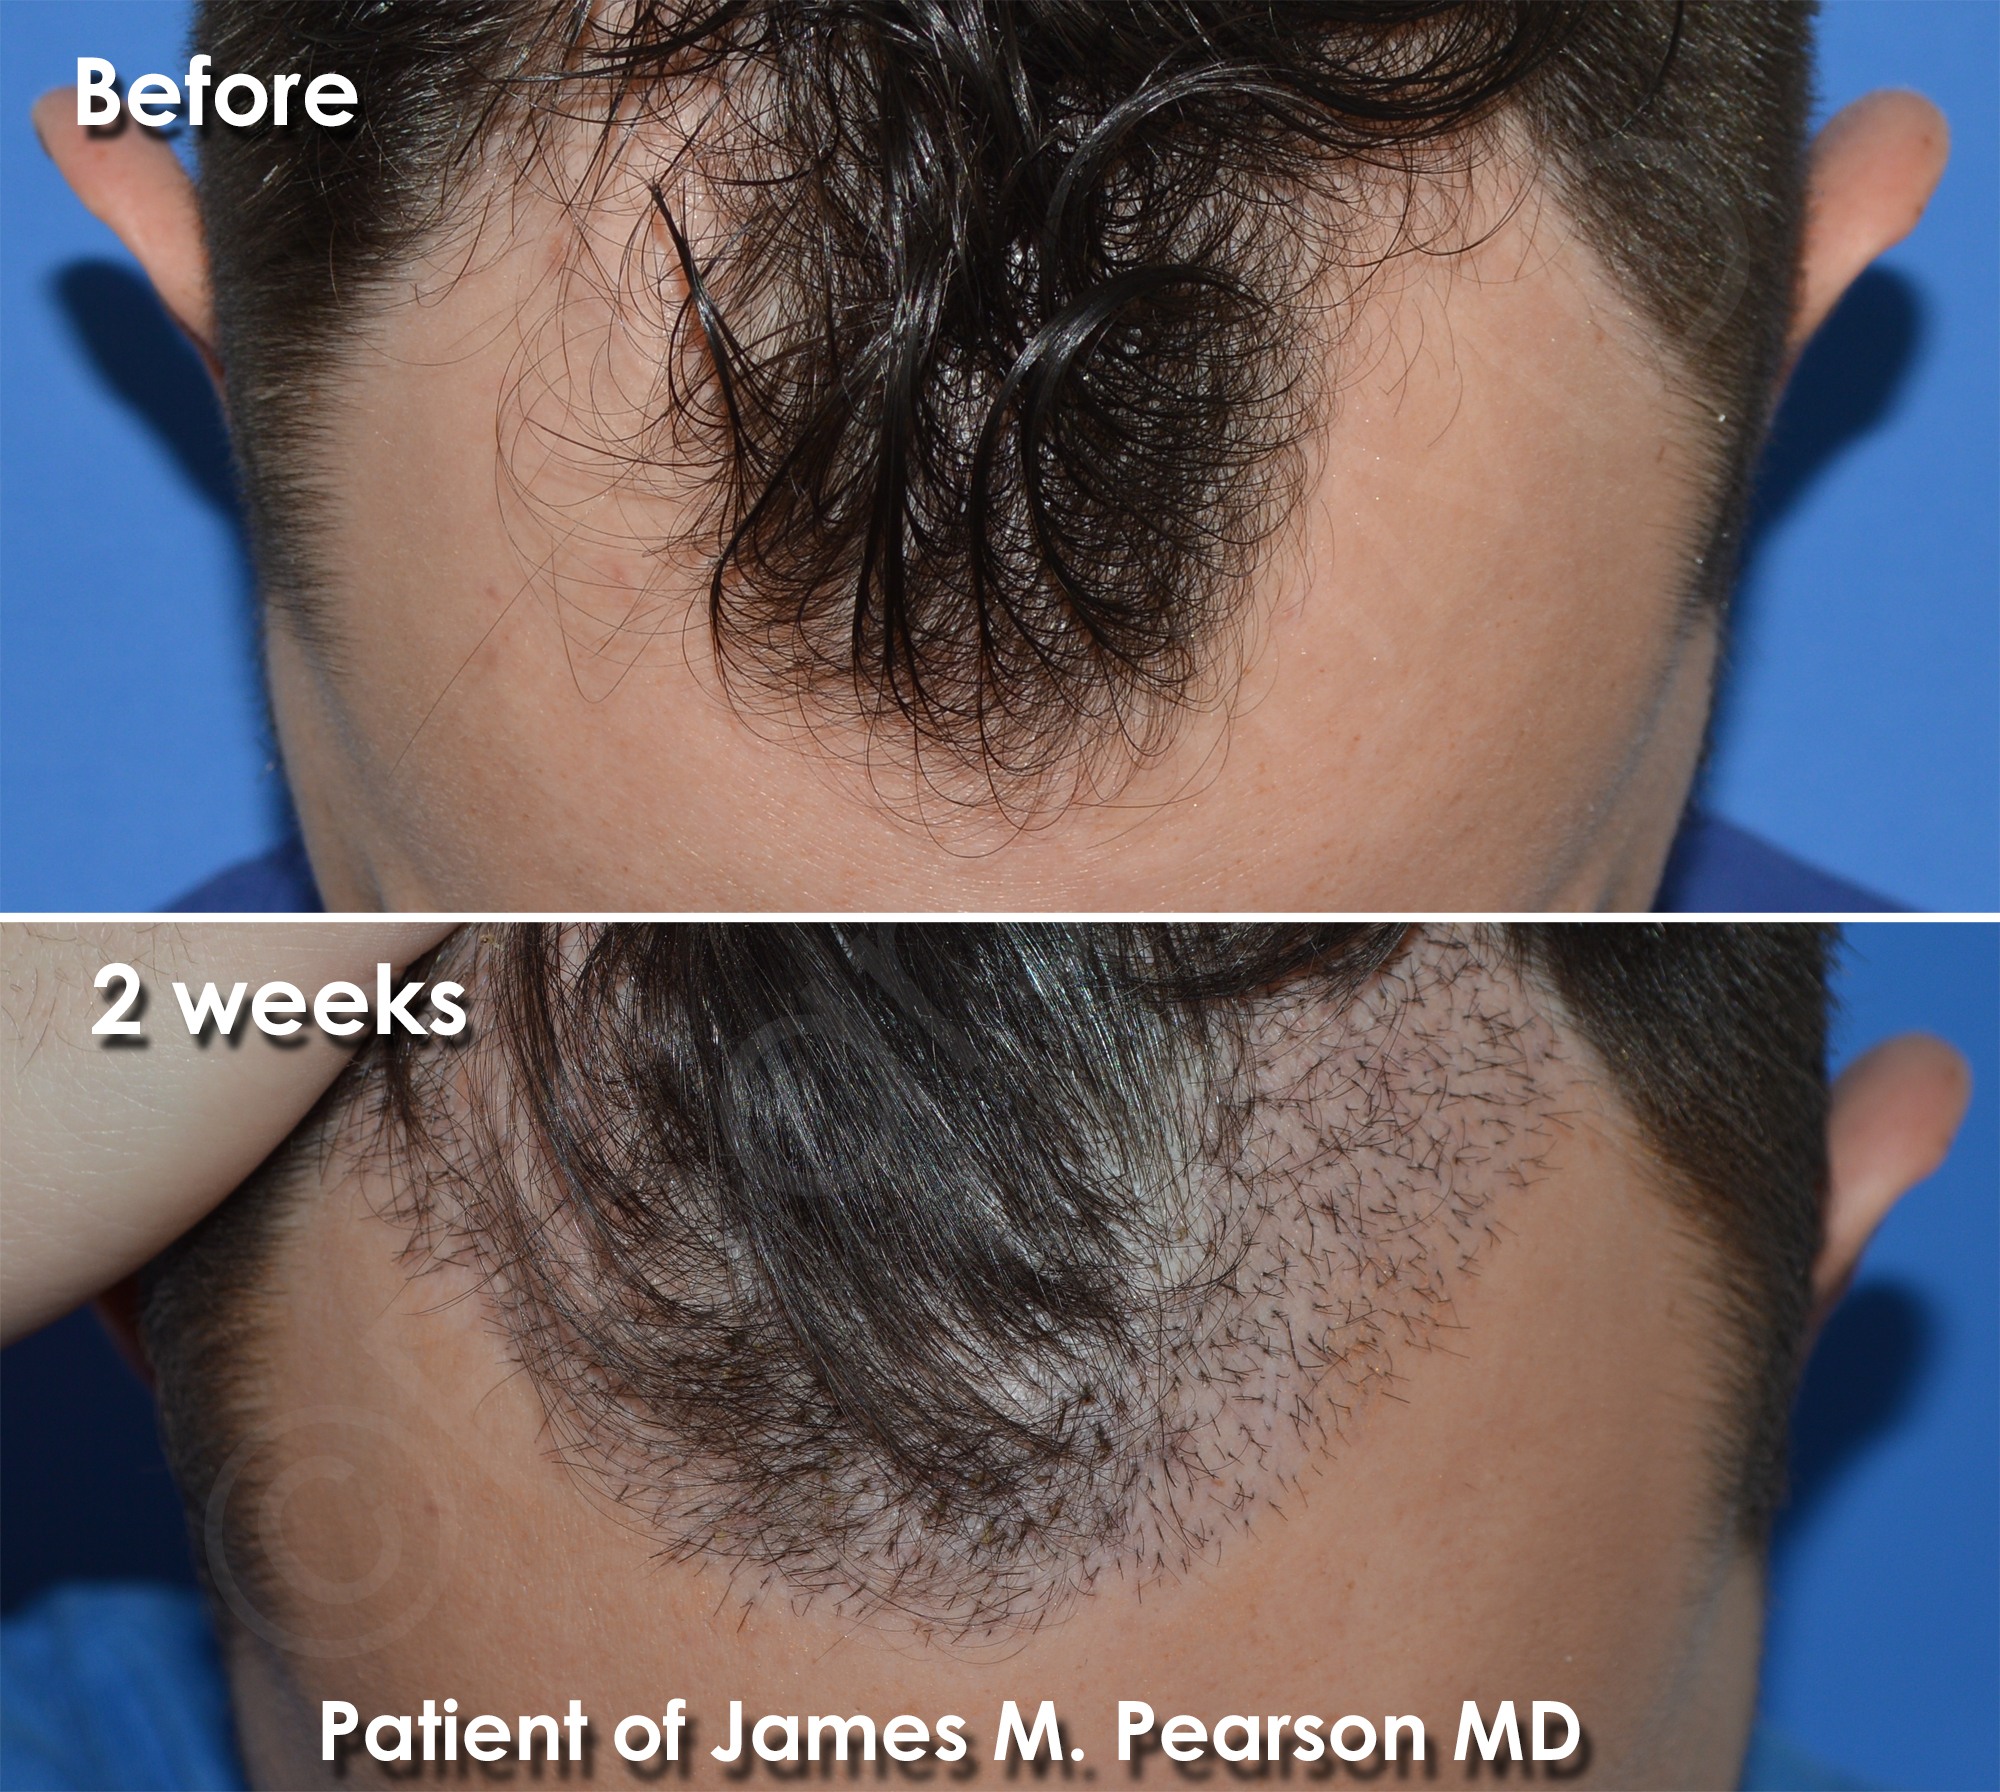 Hair Restoration - Dr. James Pearson Facial Plastic Surgery